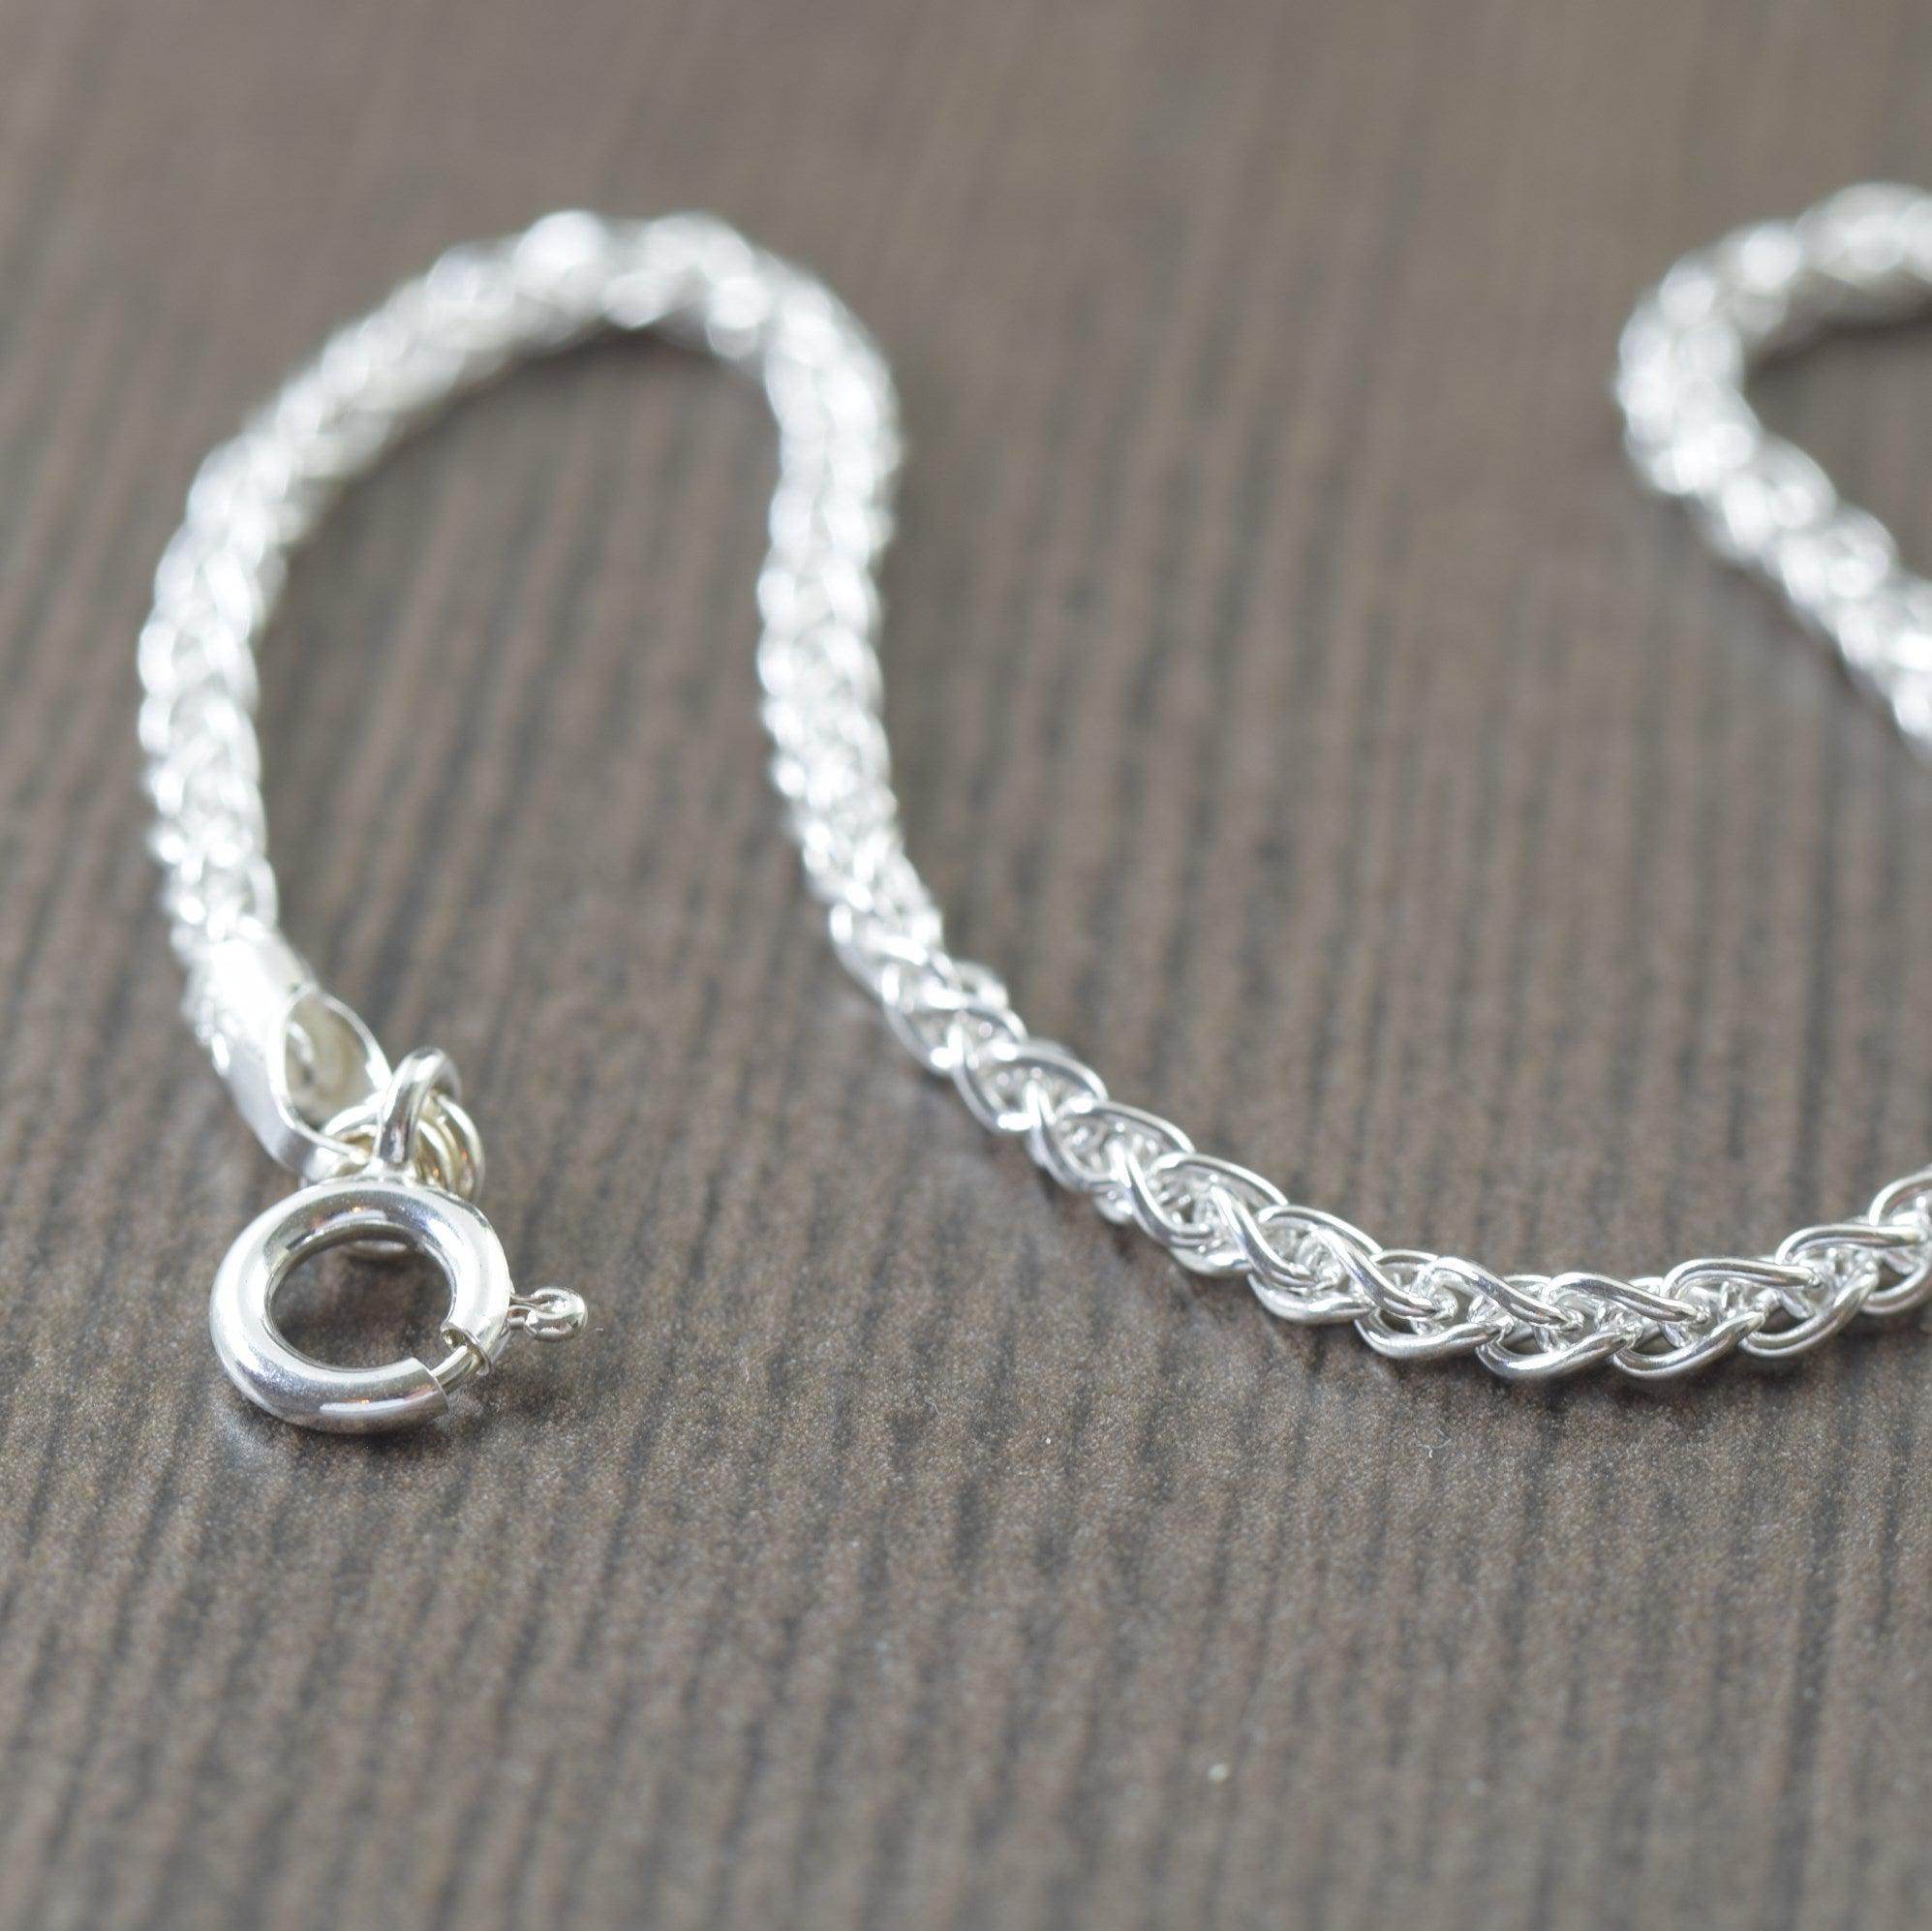 .925 Sterling Silver Wheat chain bracelet, unisex Italian chain. 7 or 8 inch length